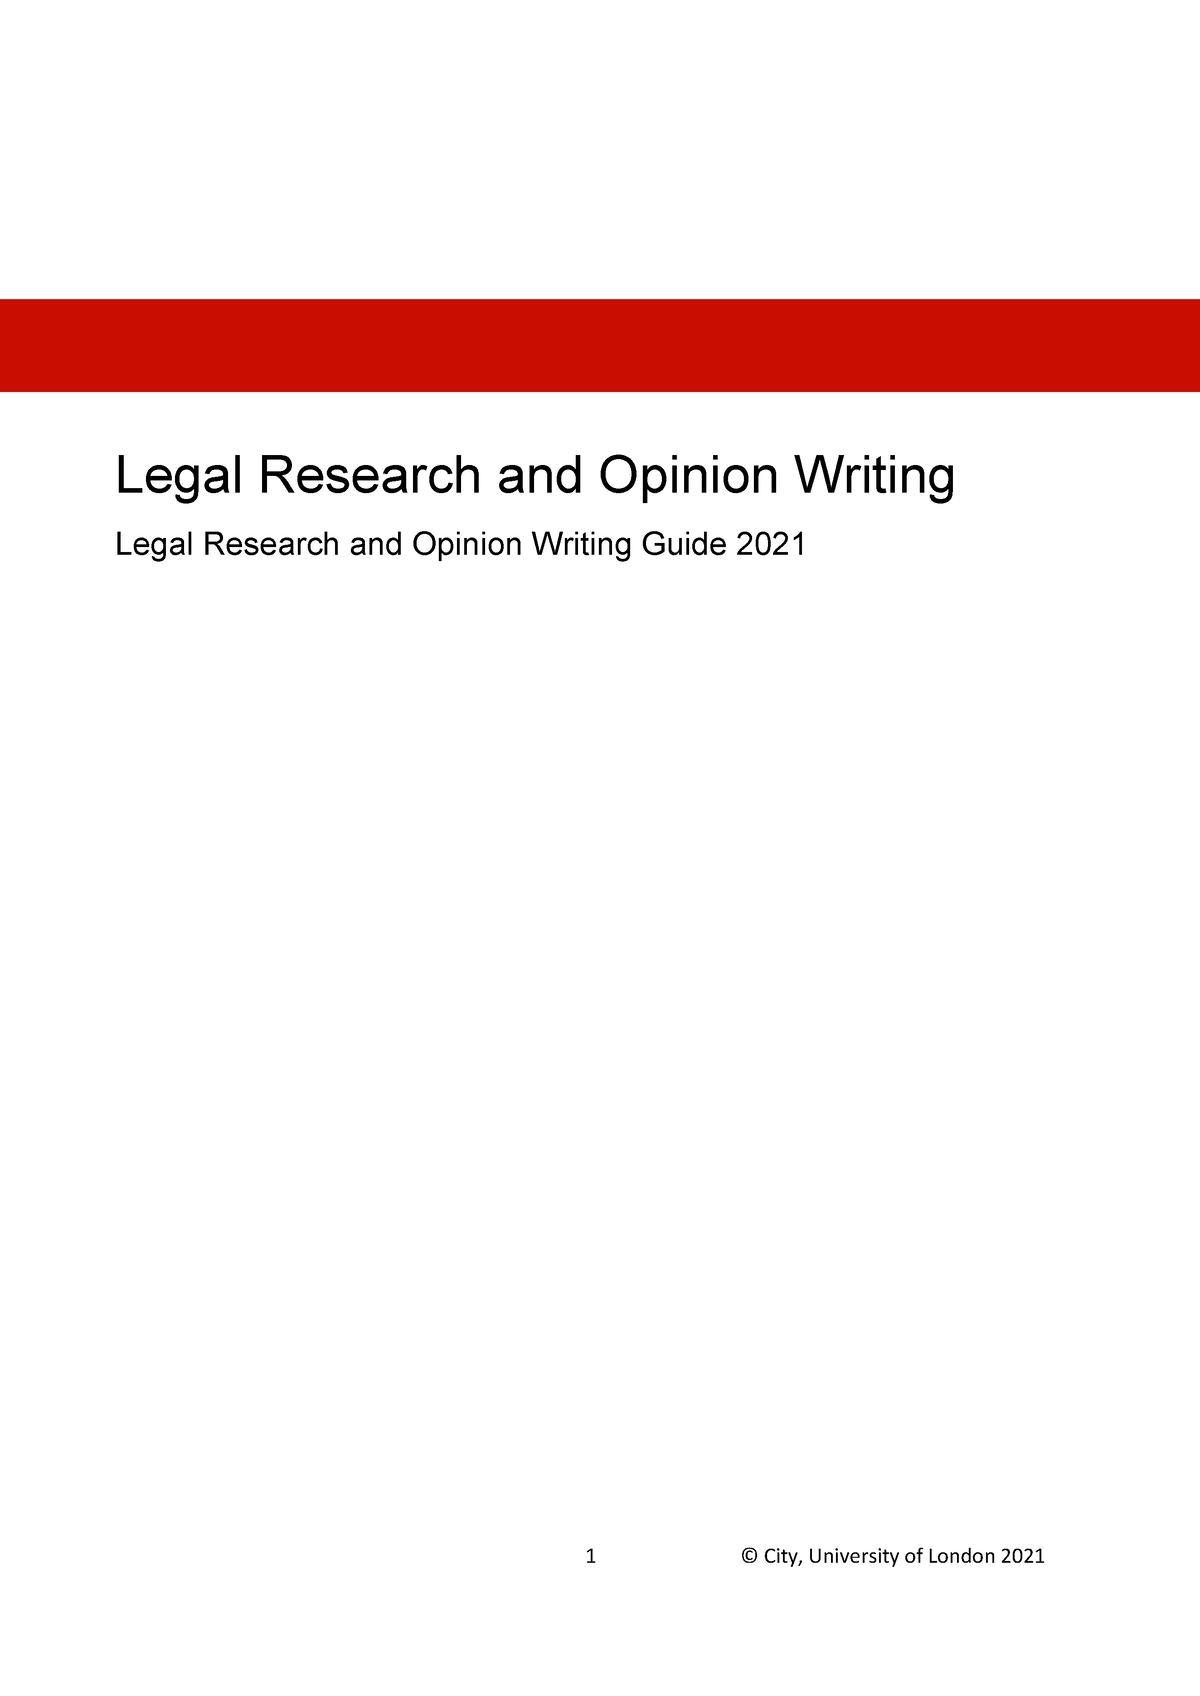 law dissertation topics 2021 uk